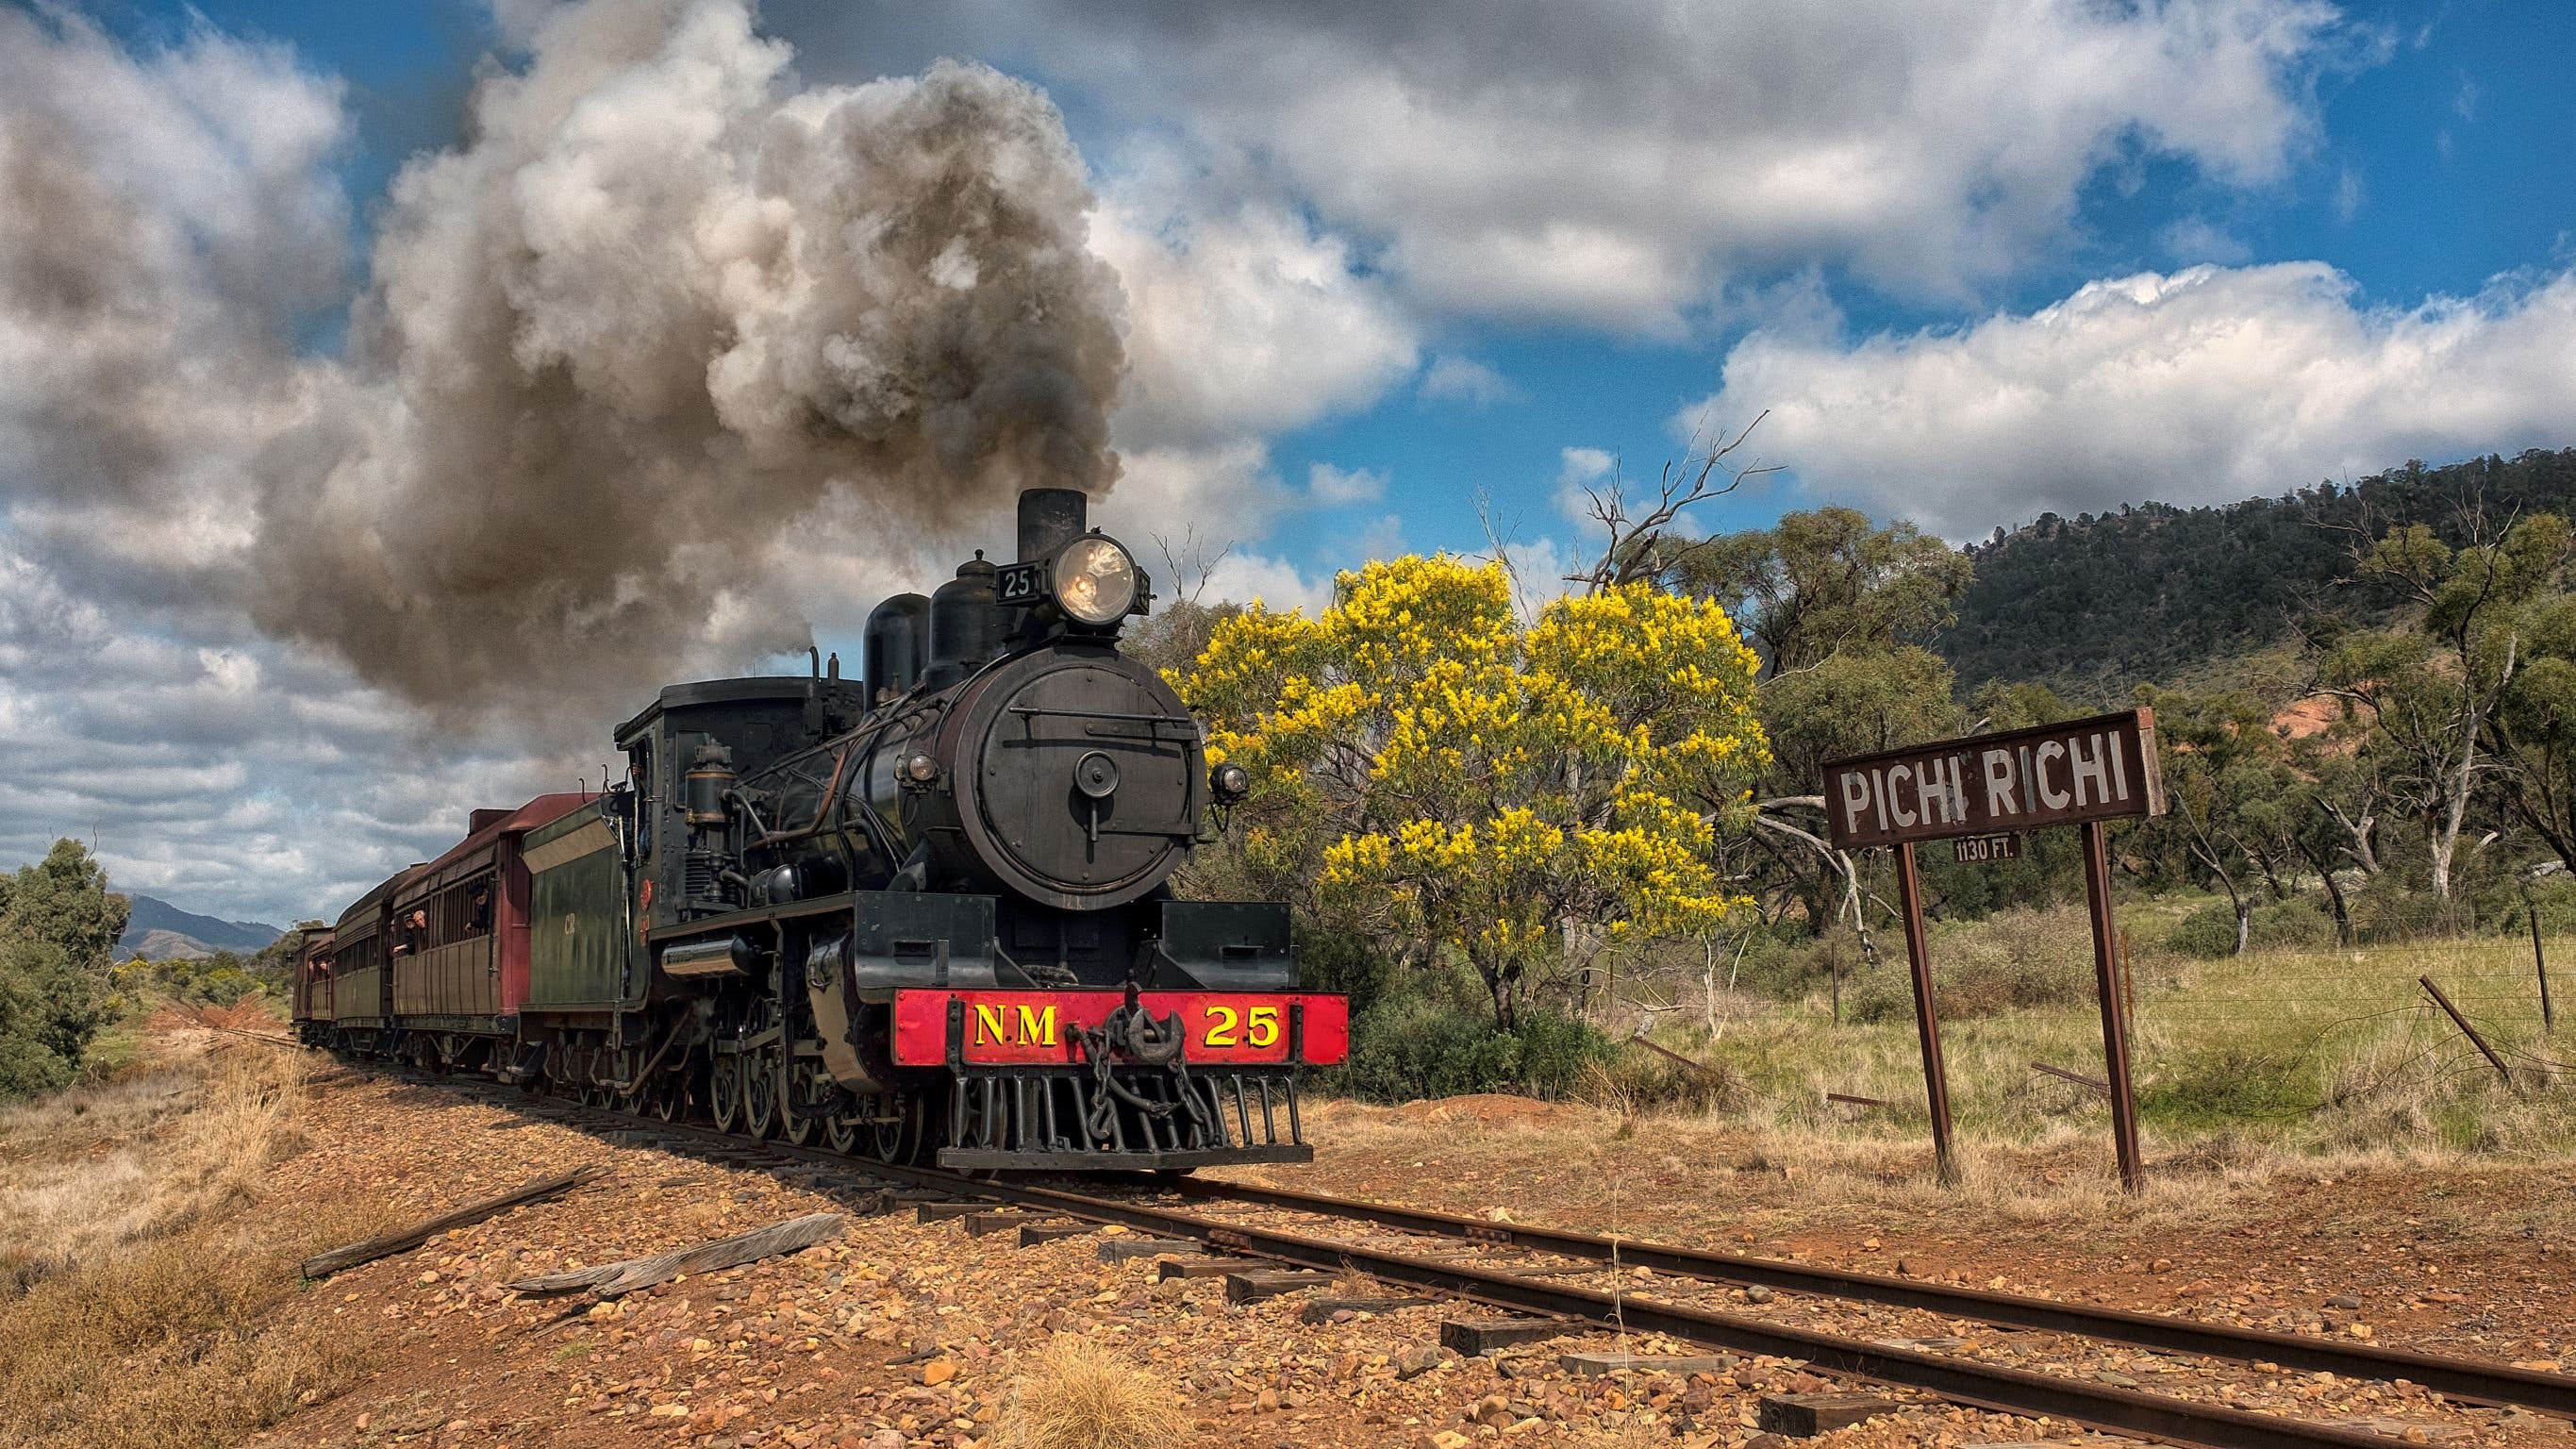 Pichi Richi Railway - Tourism Canberra